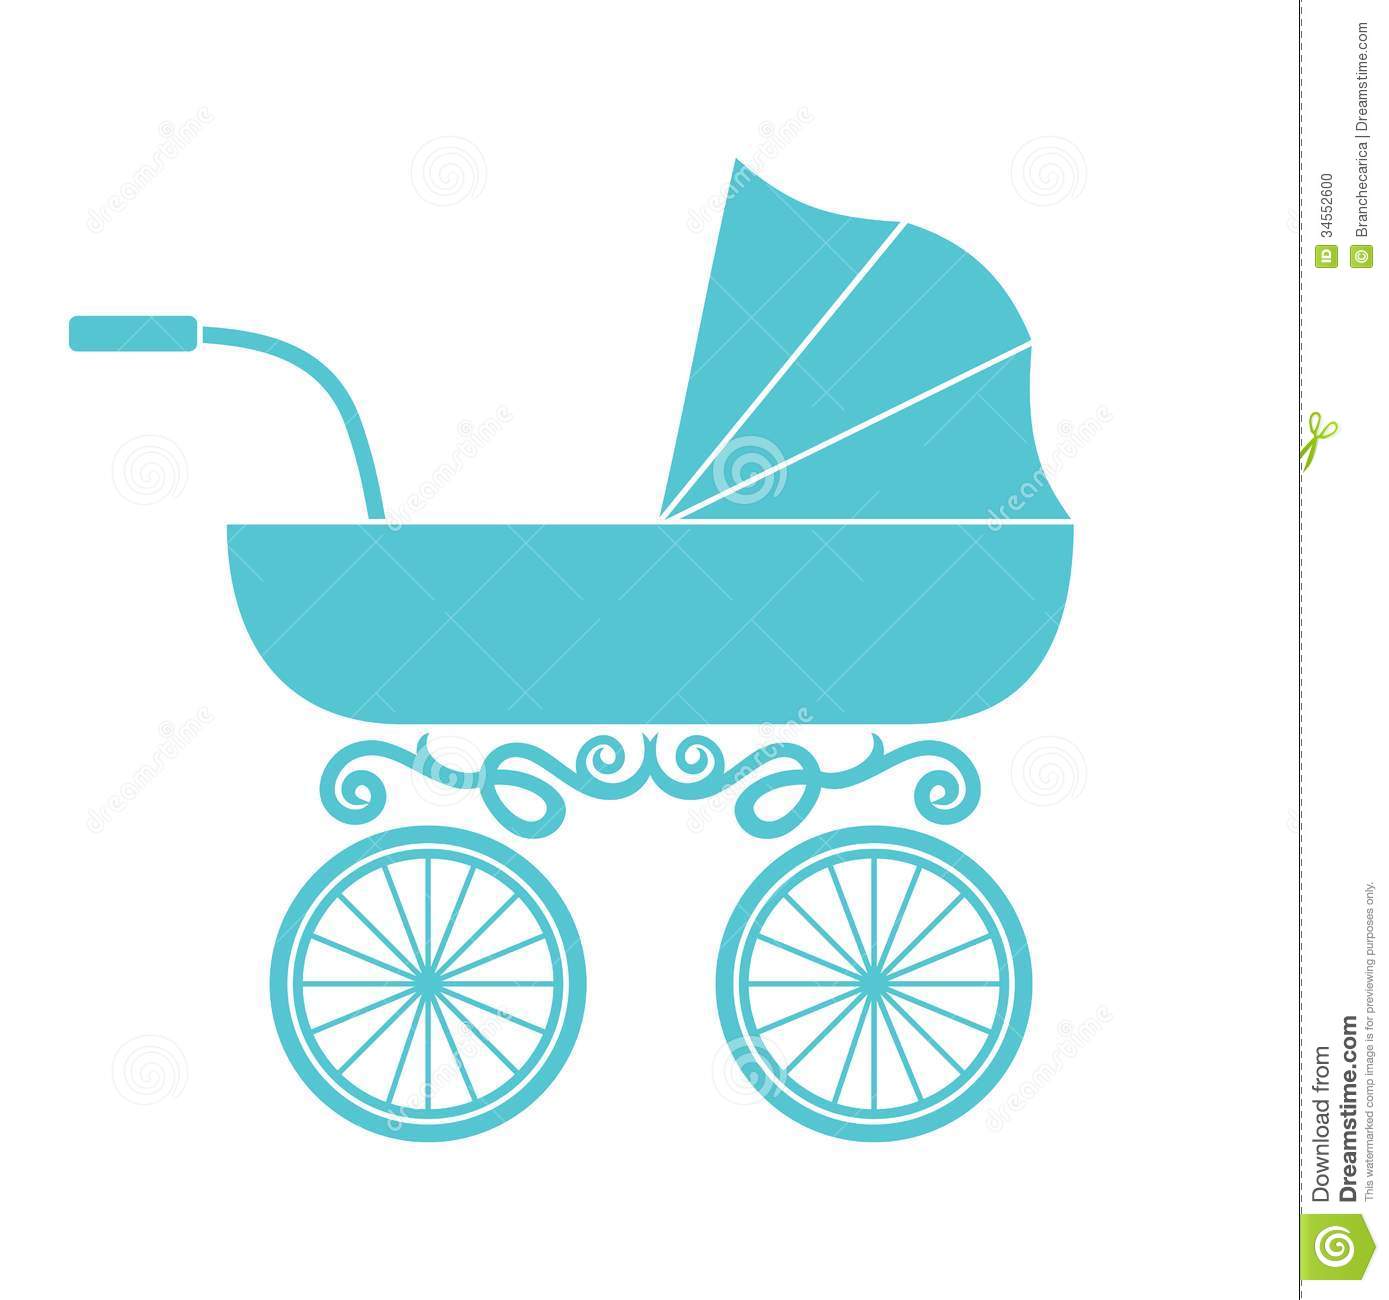 54 baby stroller.